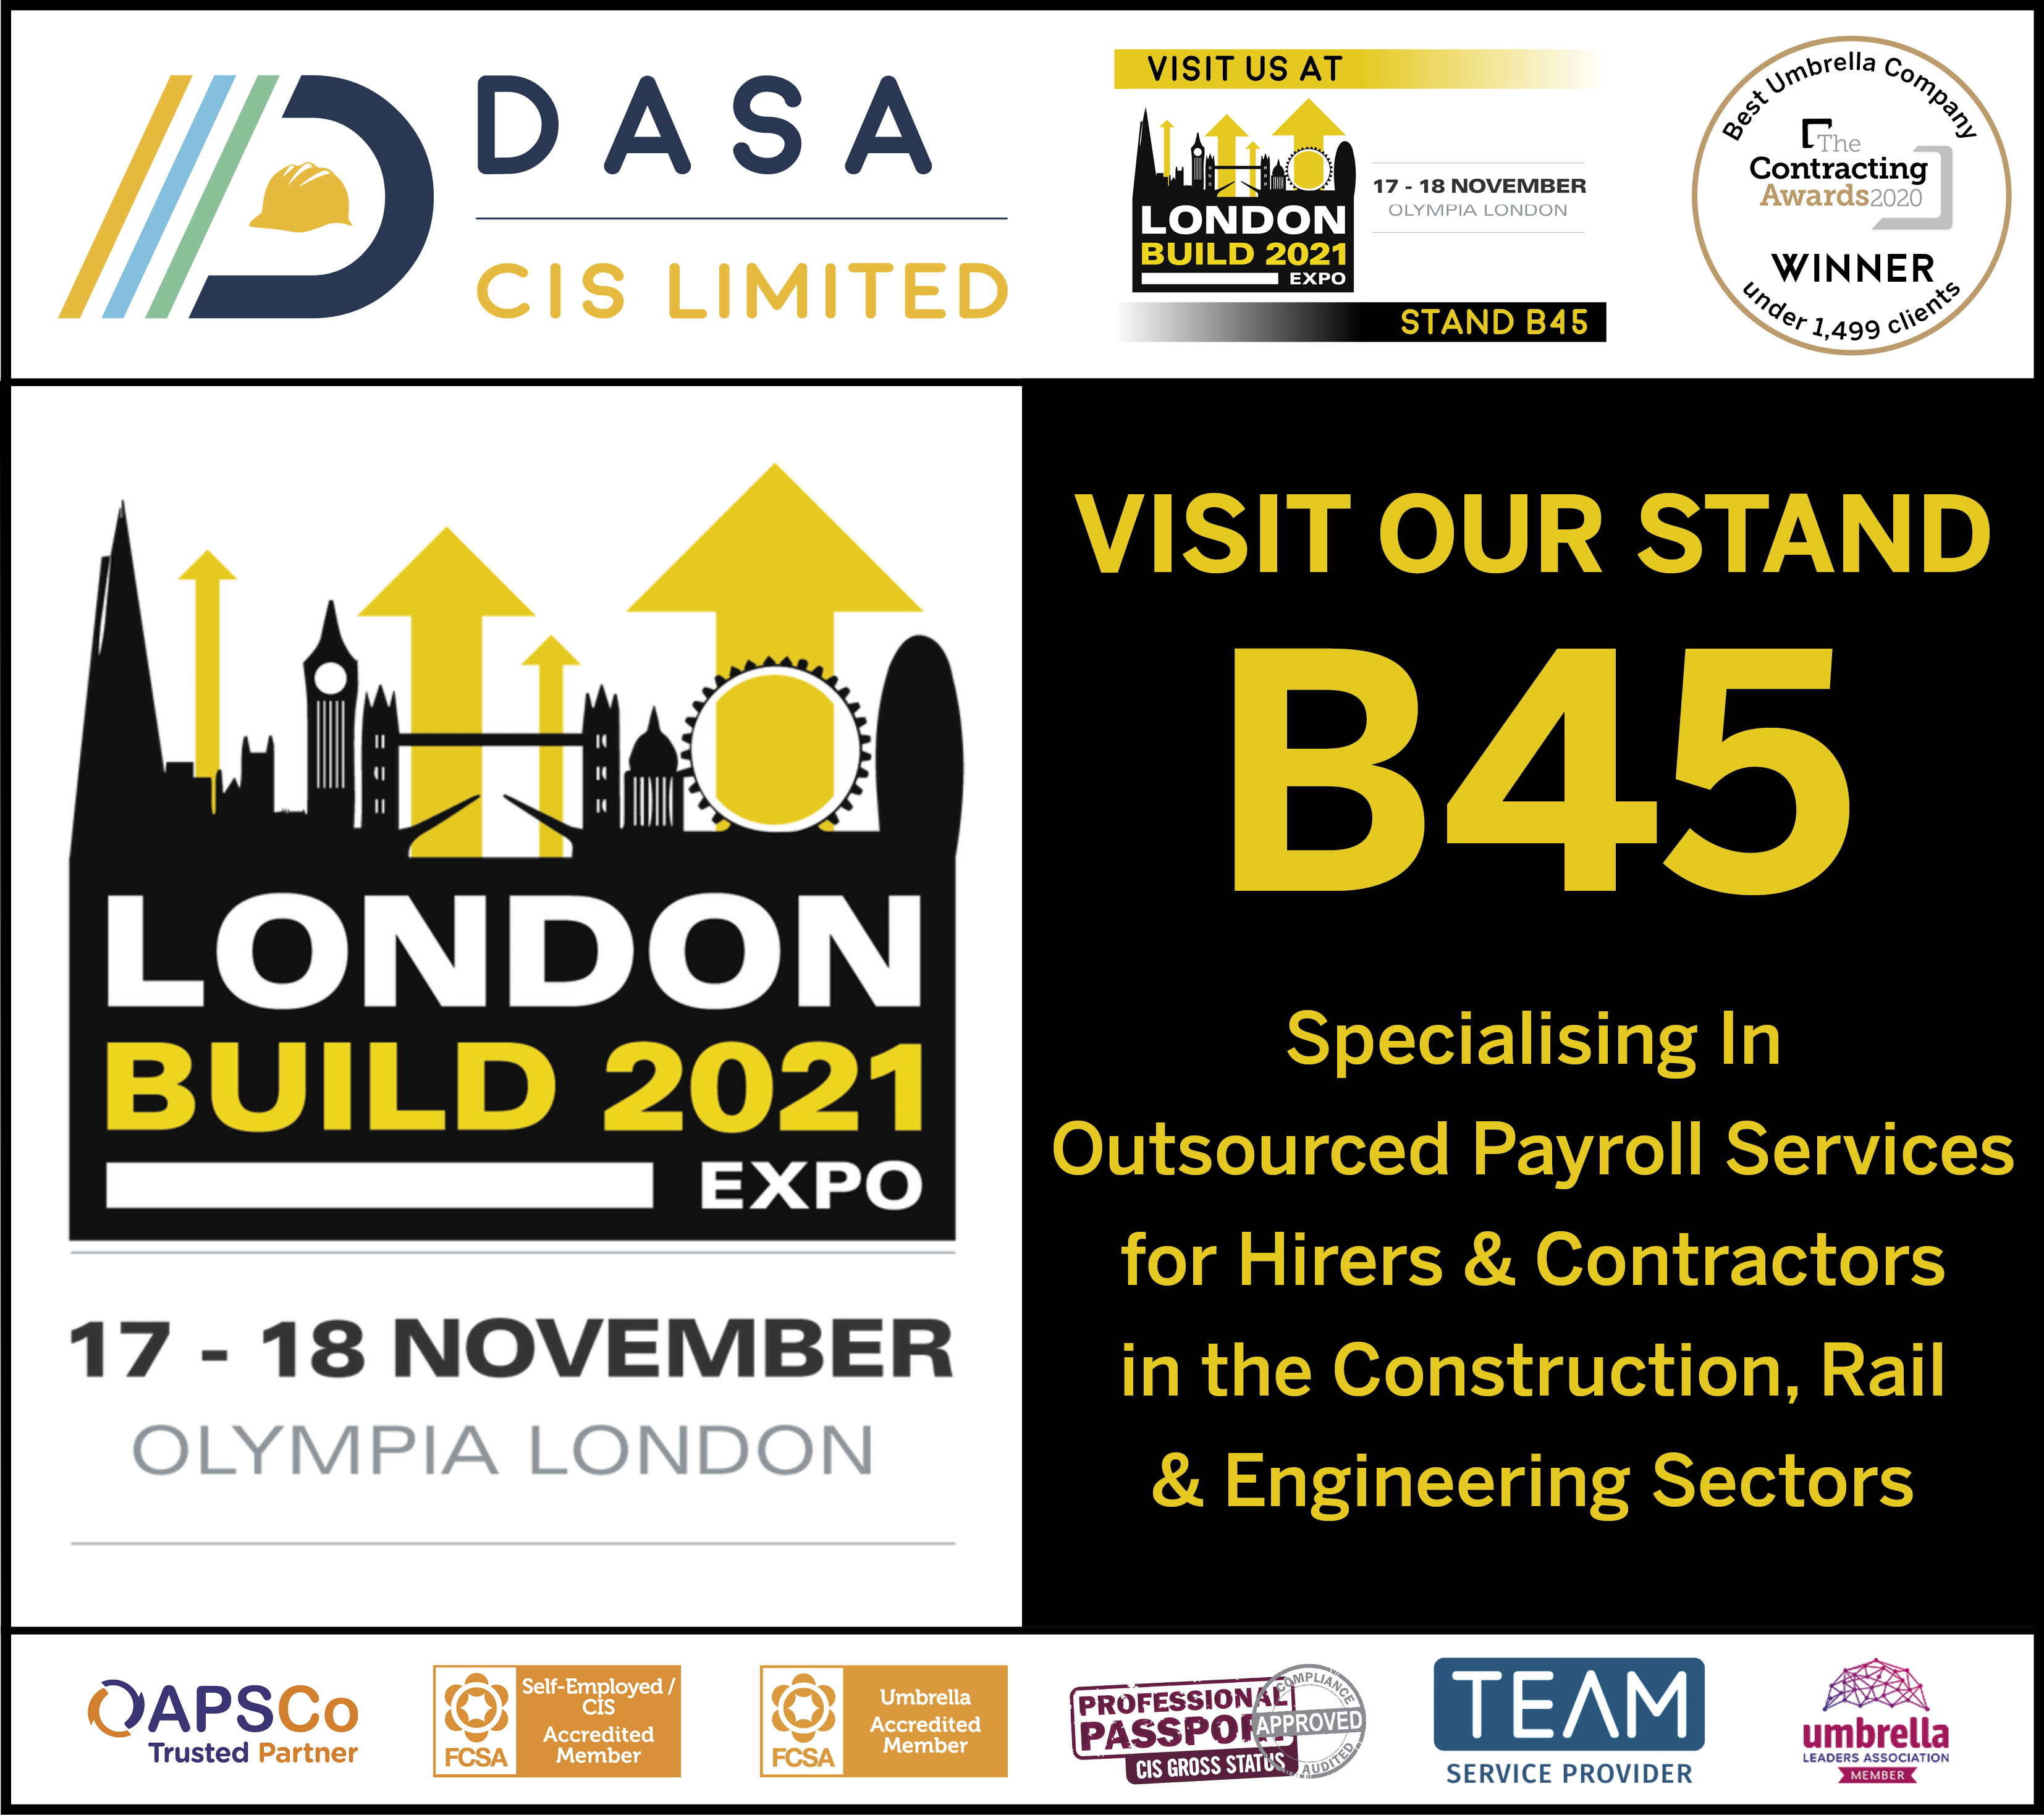 DASA CIS Limited Exhibiting at London Build 2021 Expo in November